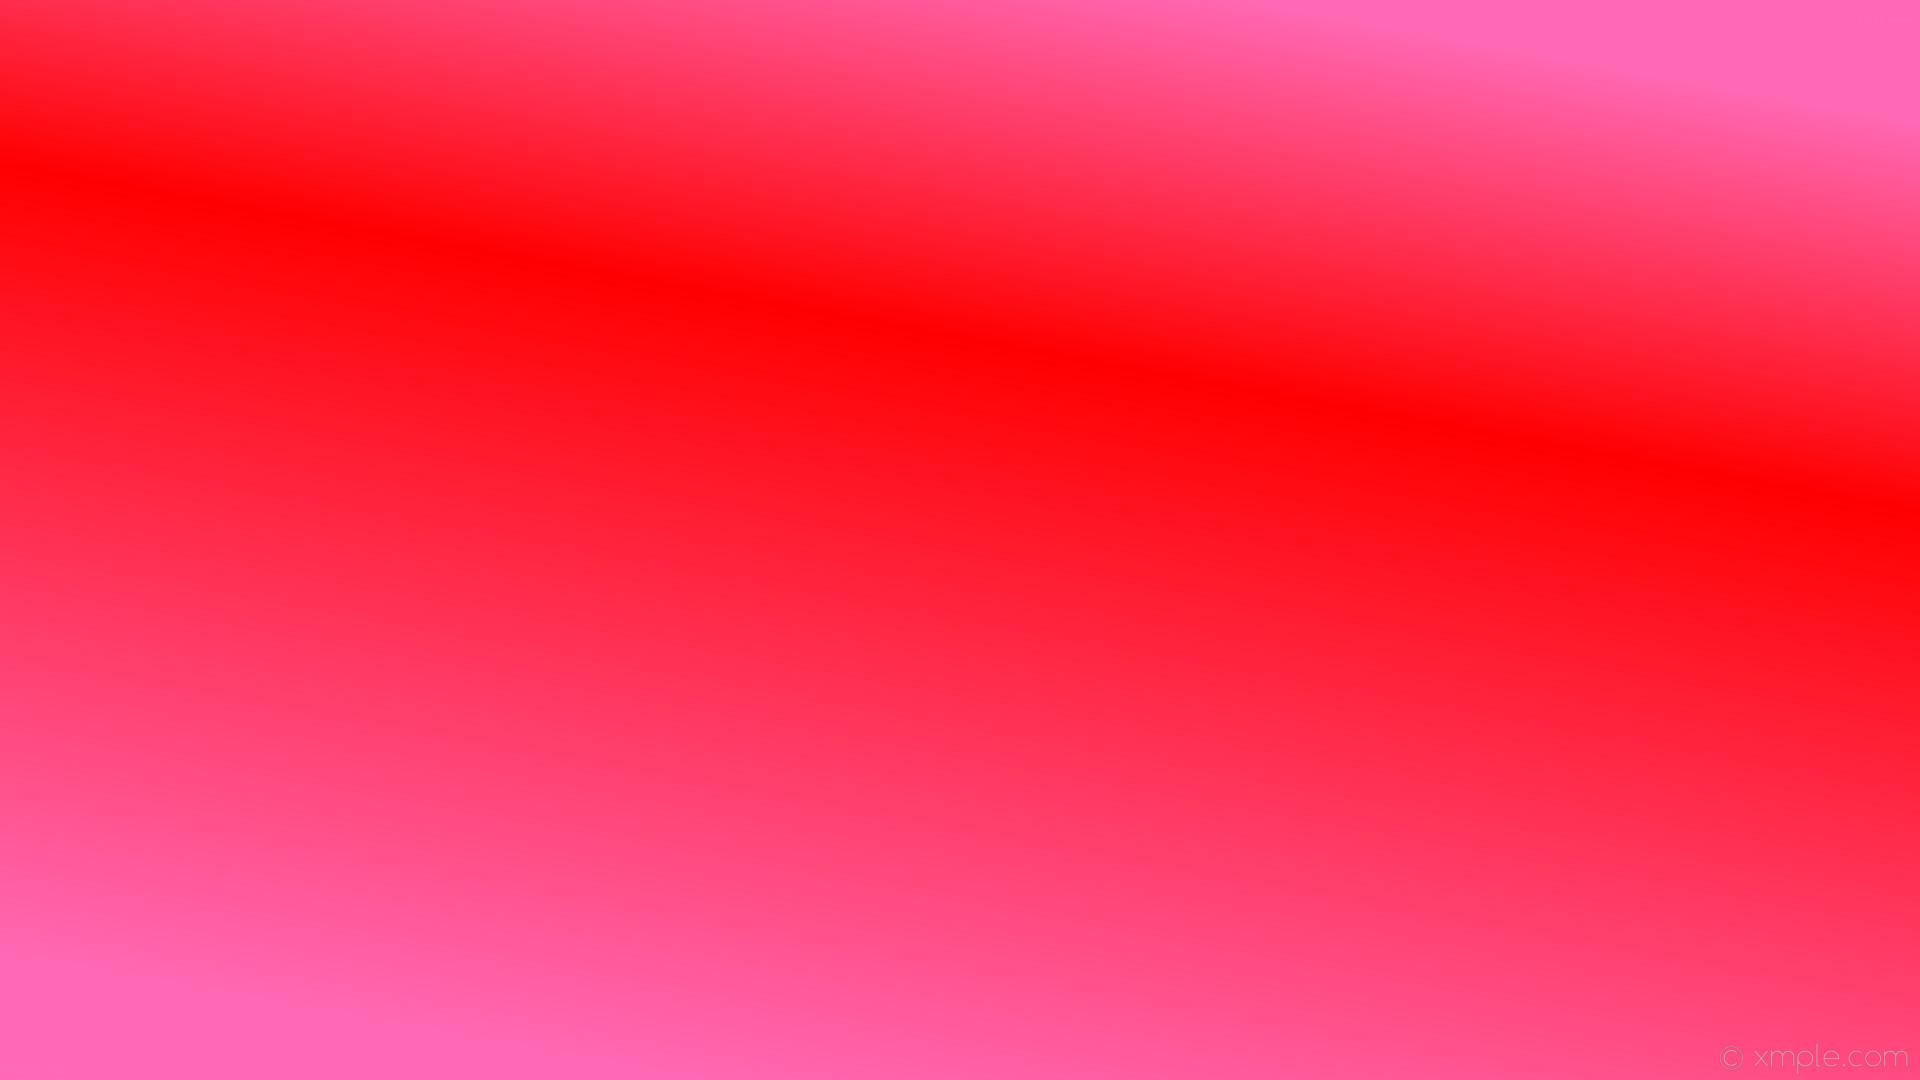 1920x1080 wallpaper highlight red gradient pink linear hot pink #ff69b4 #ff0000 240Â°  67%